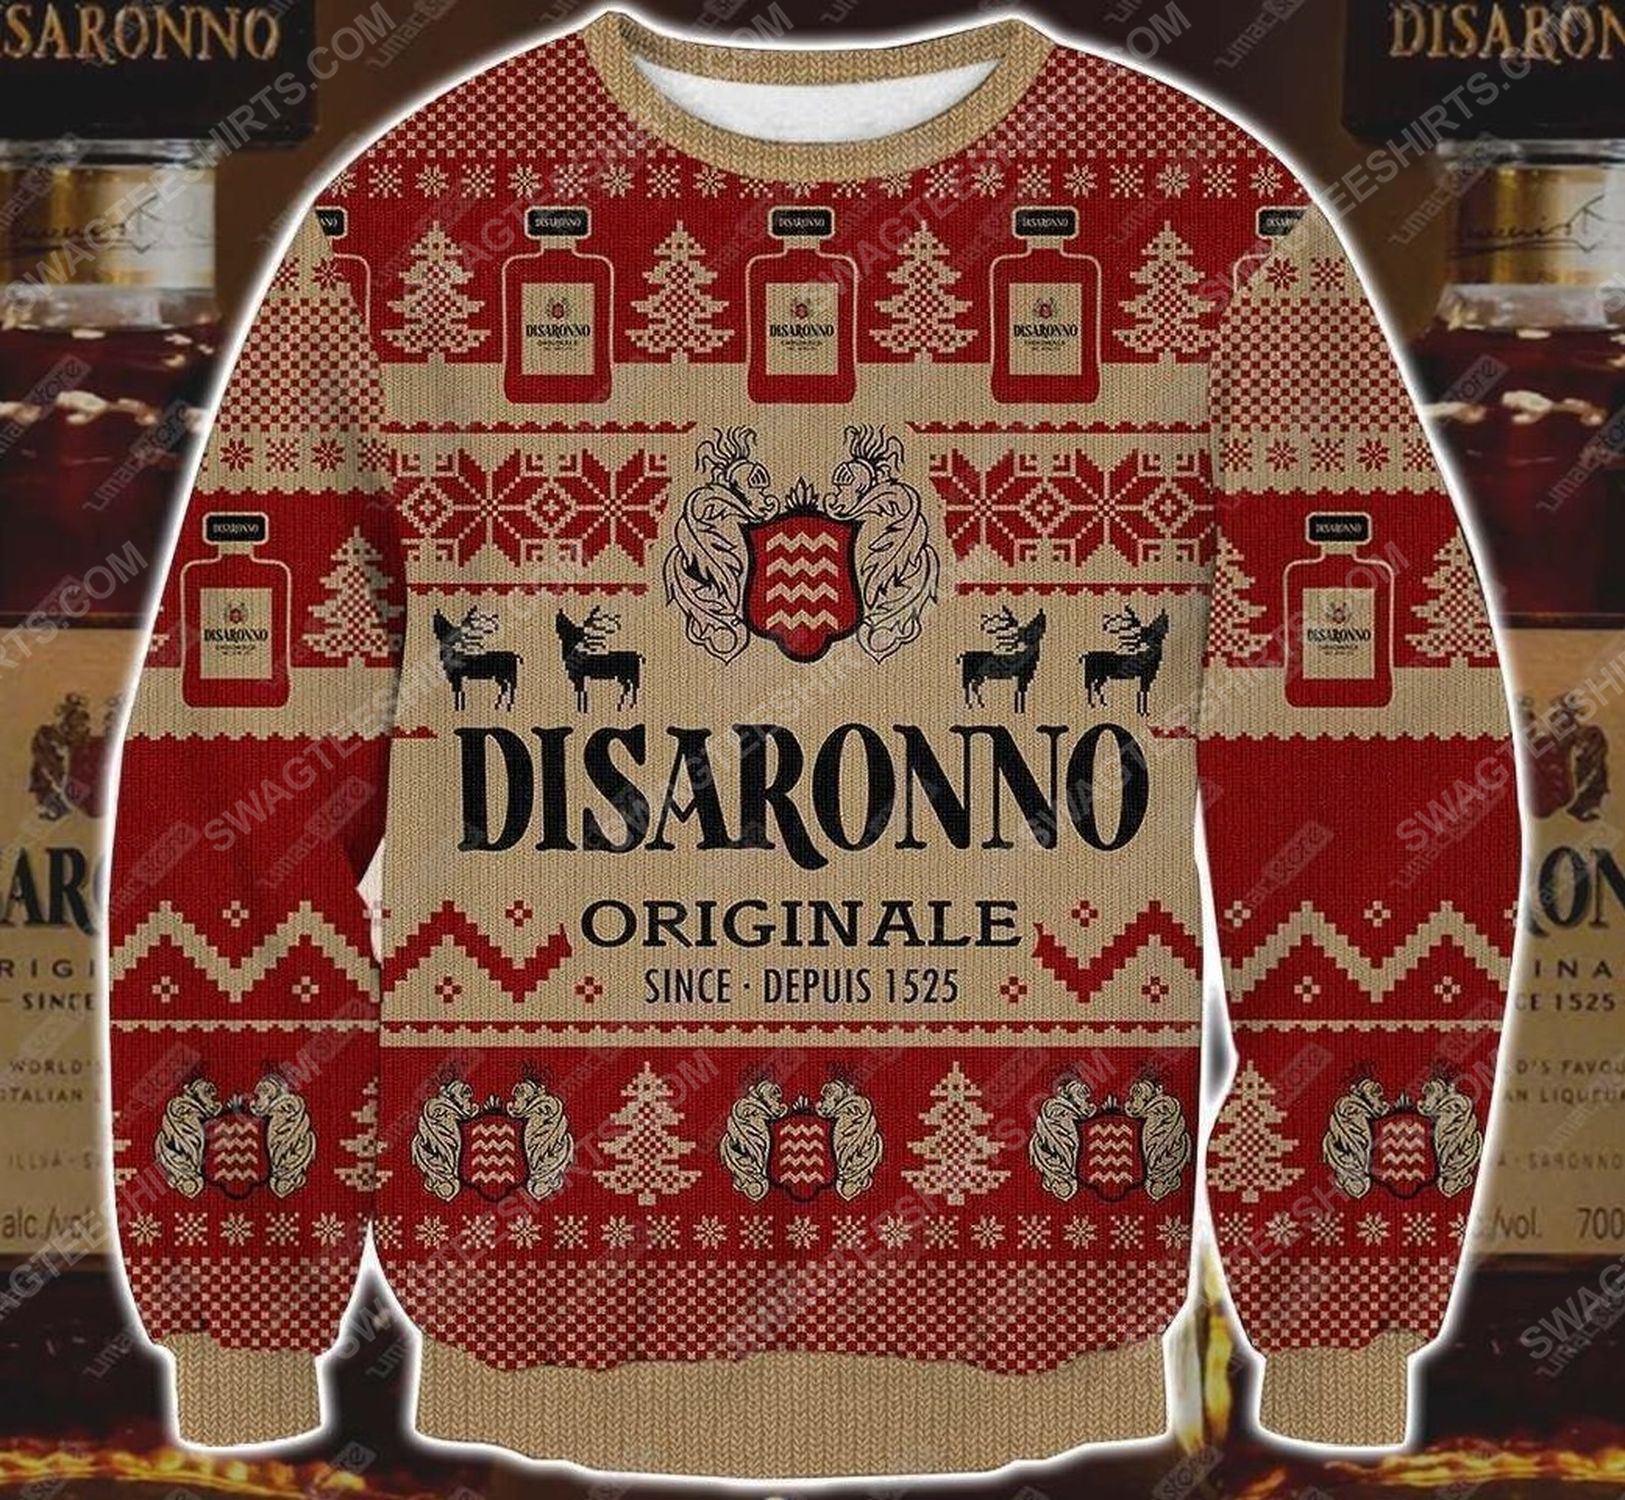 Disaronno originale since 1525 ugly christmas sweater - Copy (2)